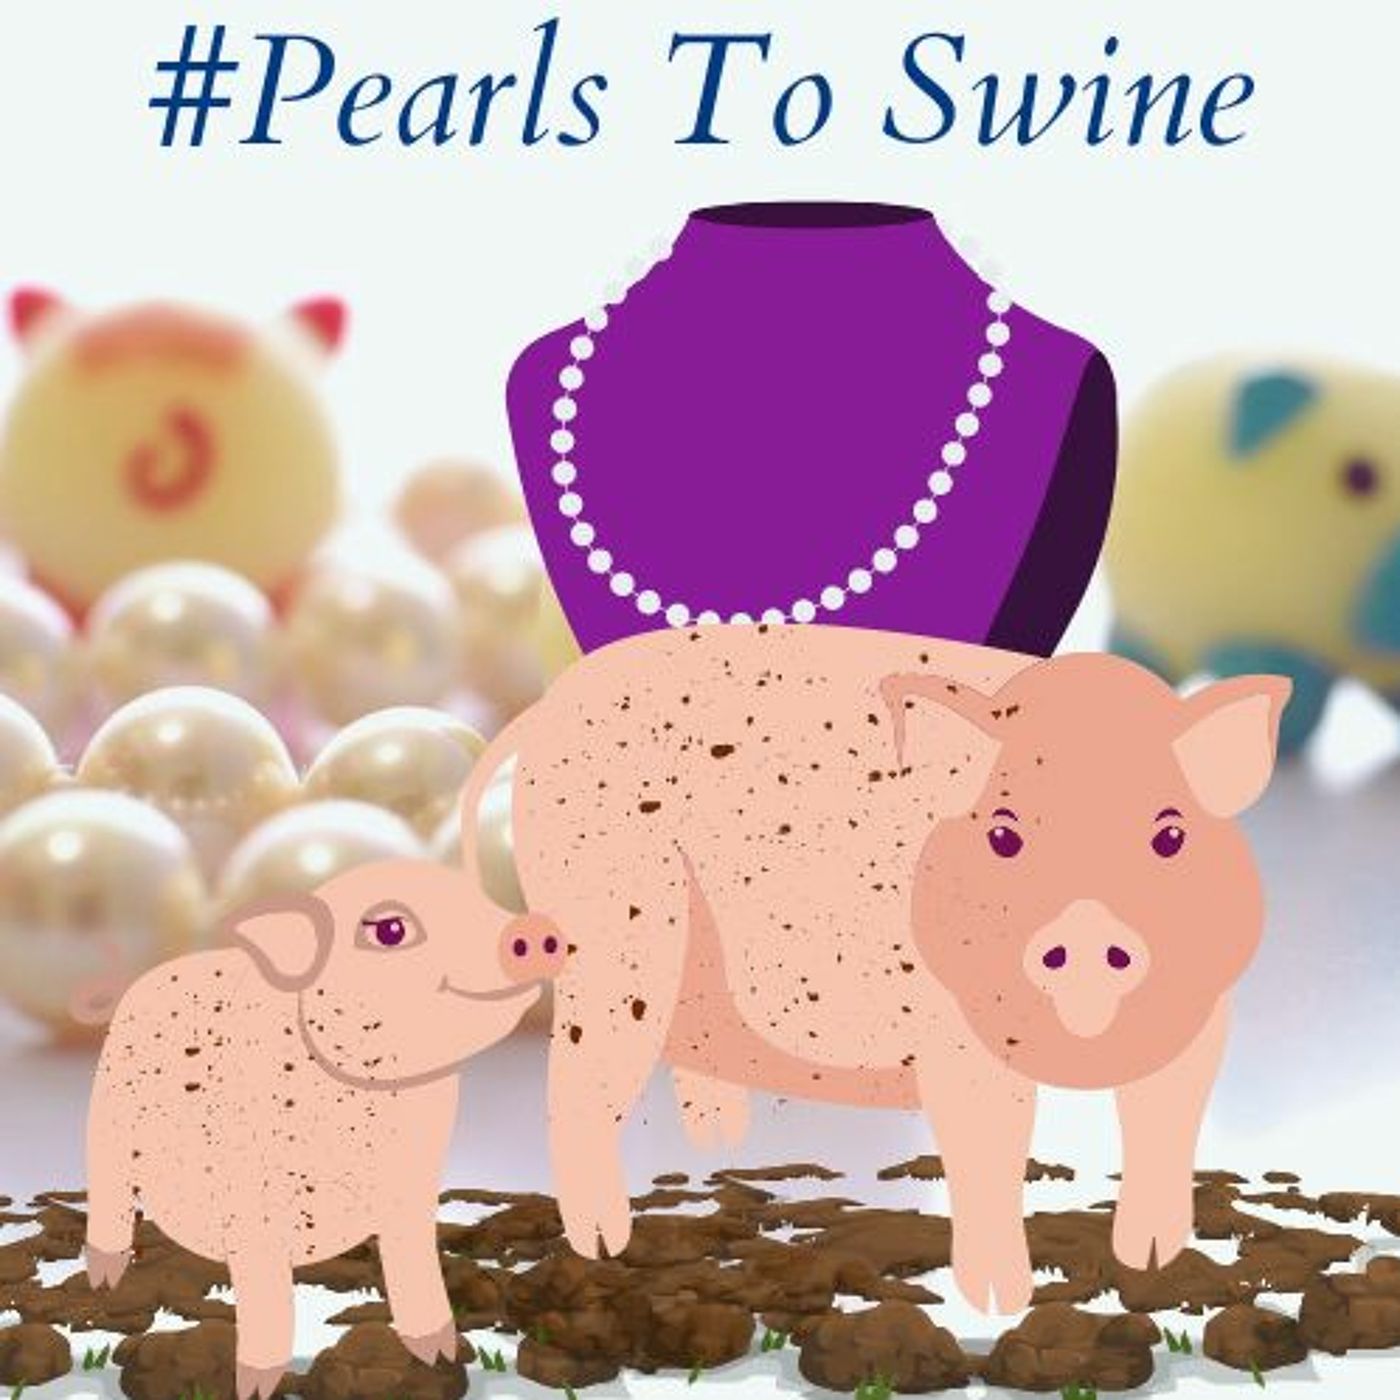 #Pearls To Swine!